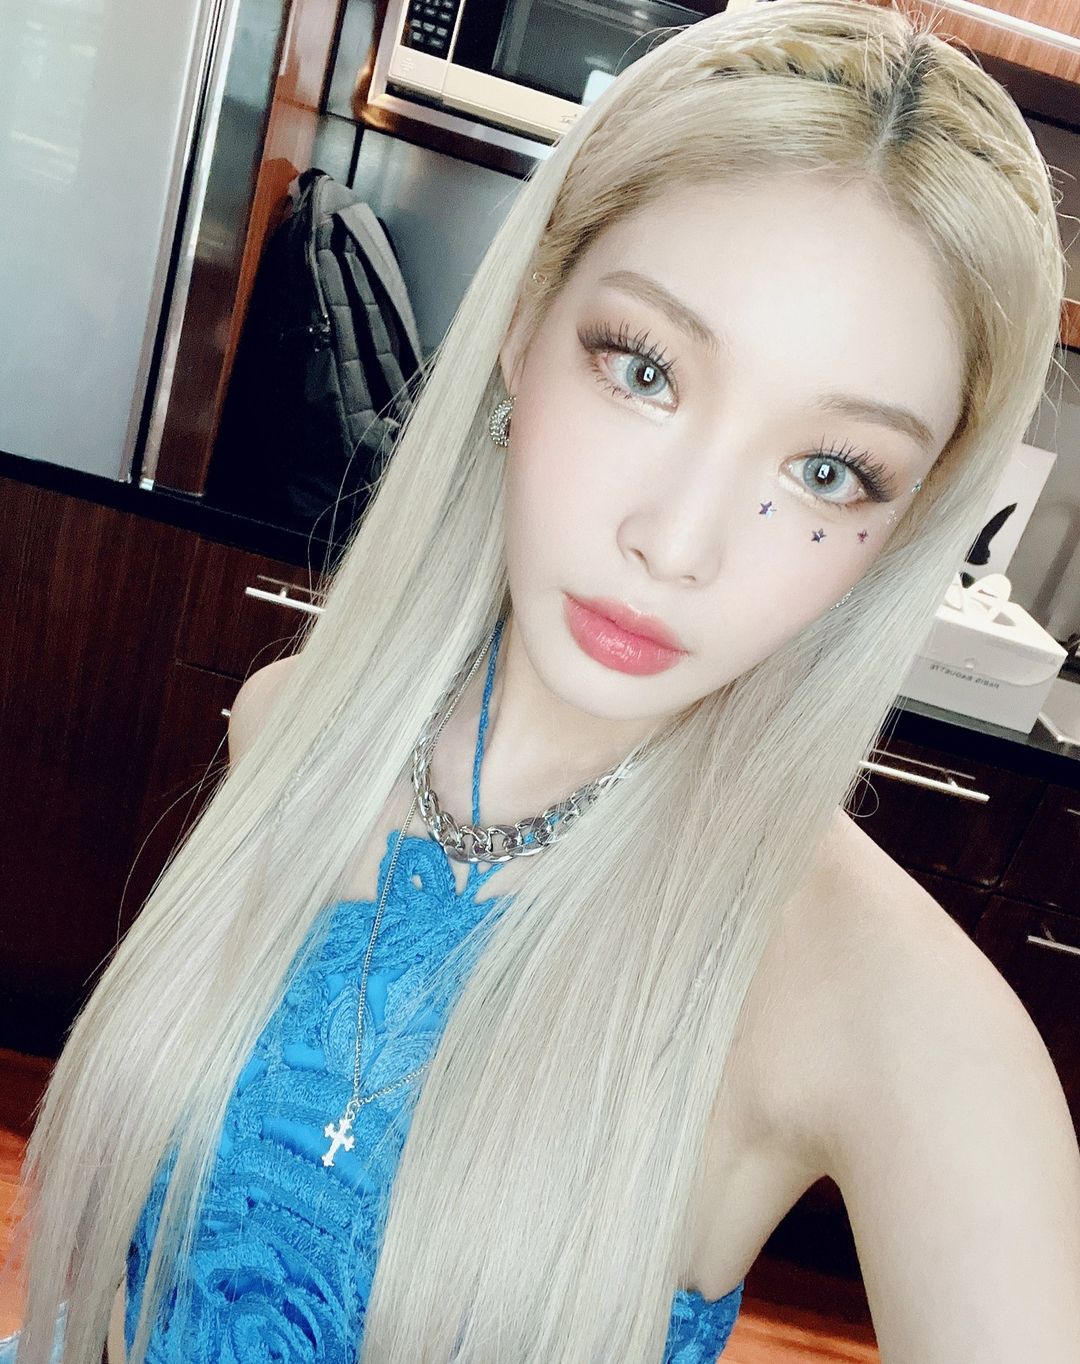 Kim chung-ha 18 hottest pics, kim chung-ha 18 instagram